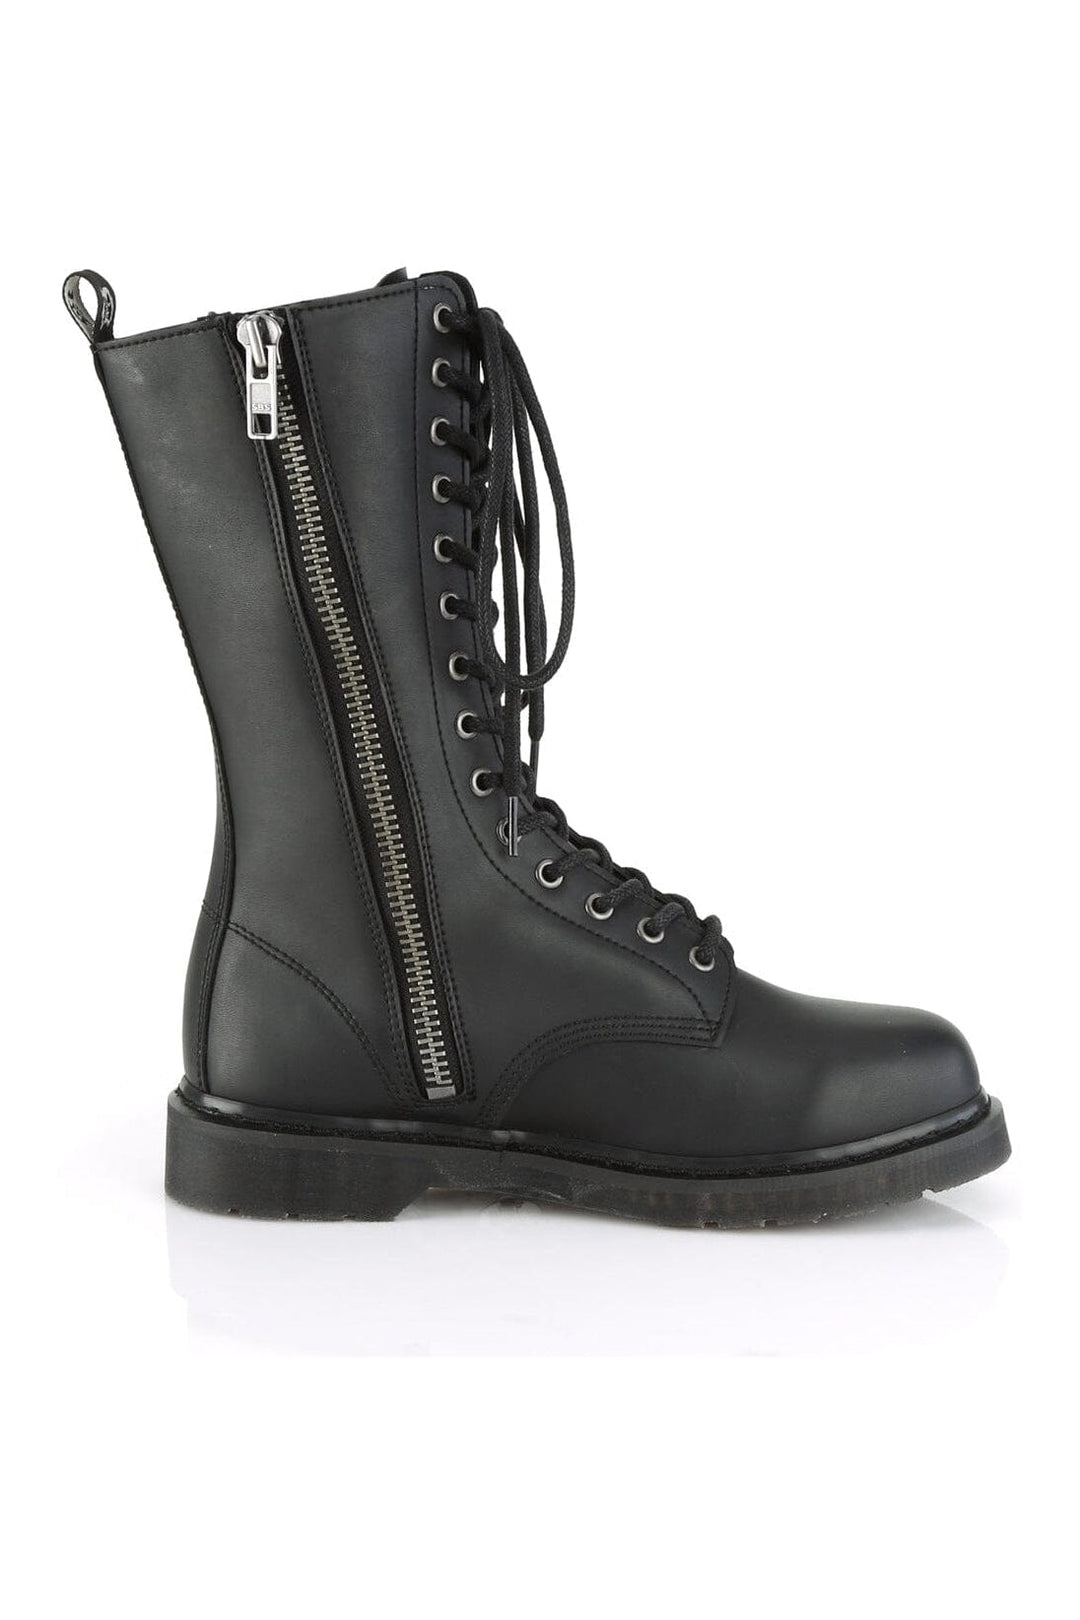 BOLT-300 Black Vegan Leather Knee Boot-Knee Boots-Demonia-SEXYSHOES.COM